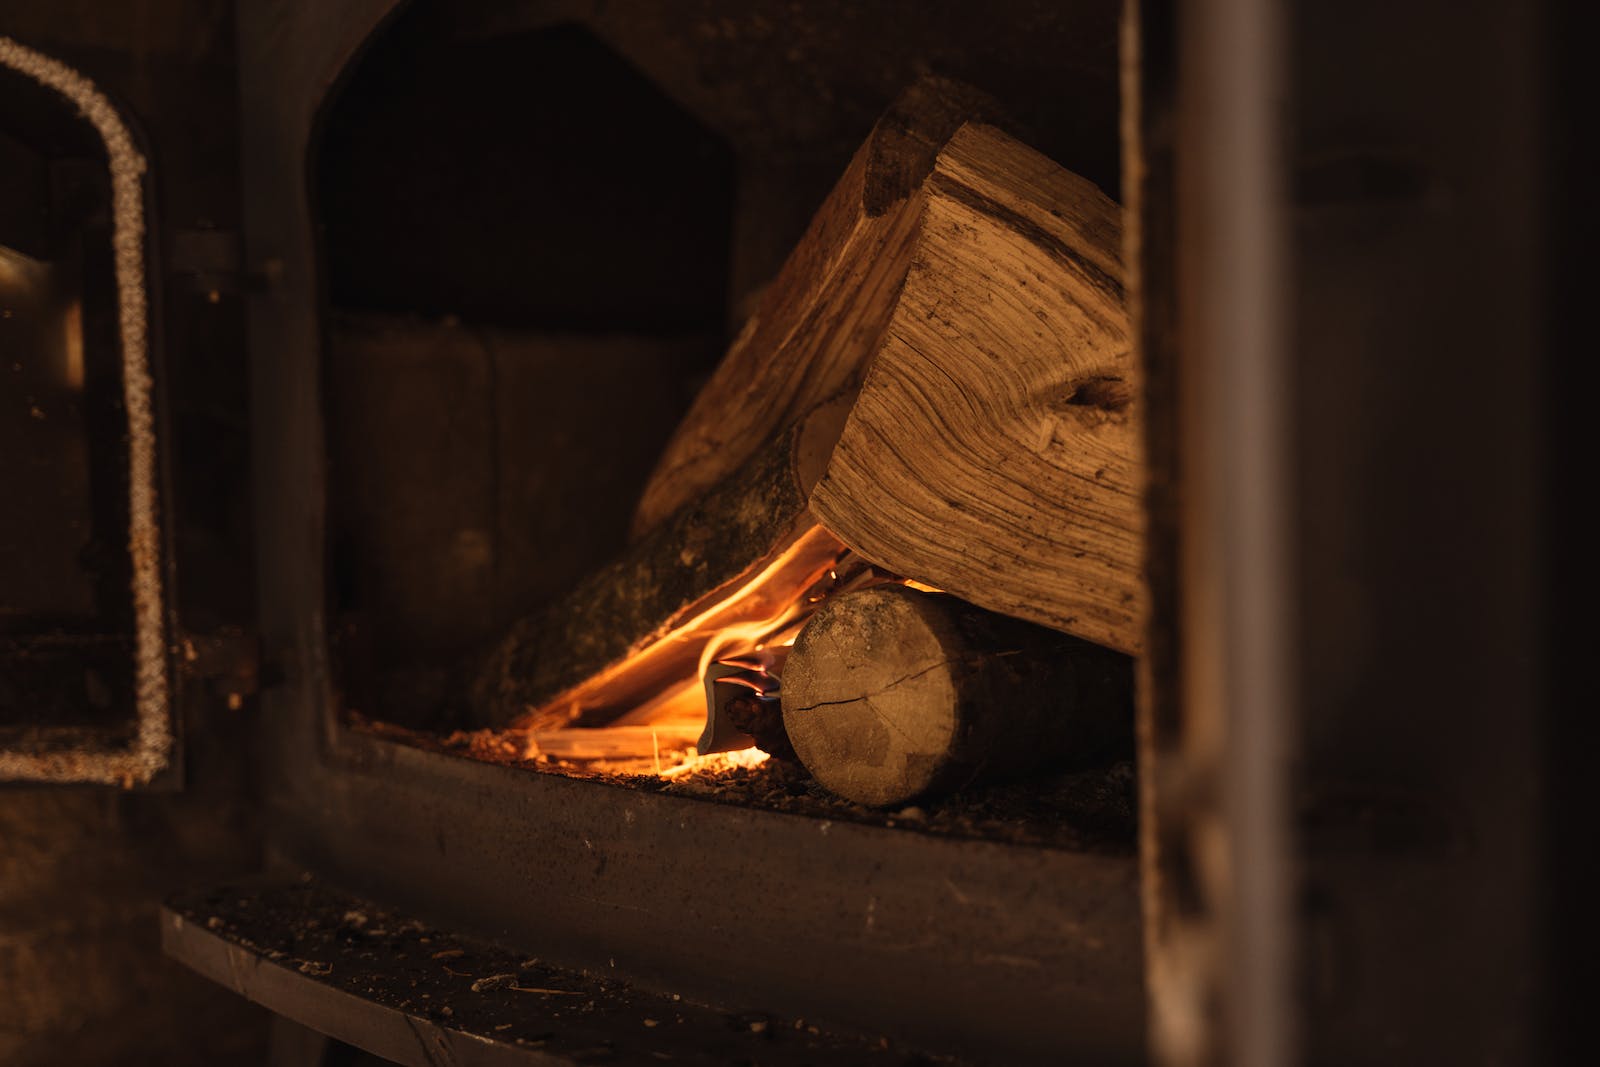 Wood burning in fireplace in dark room